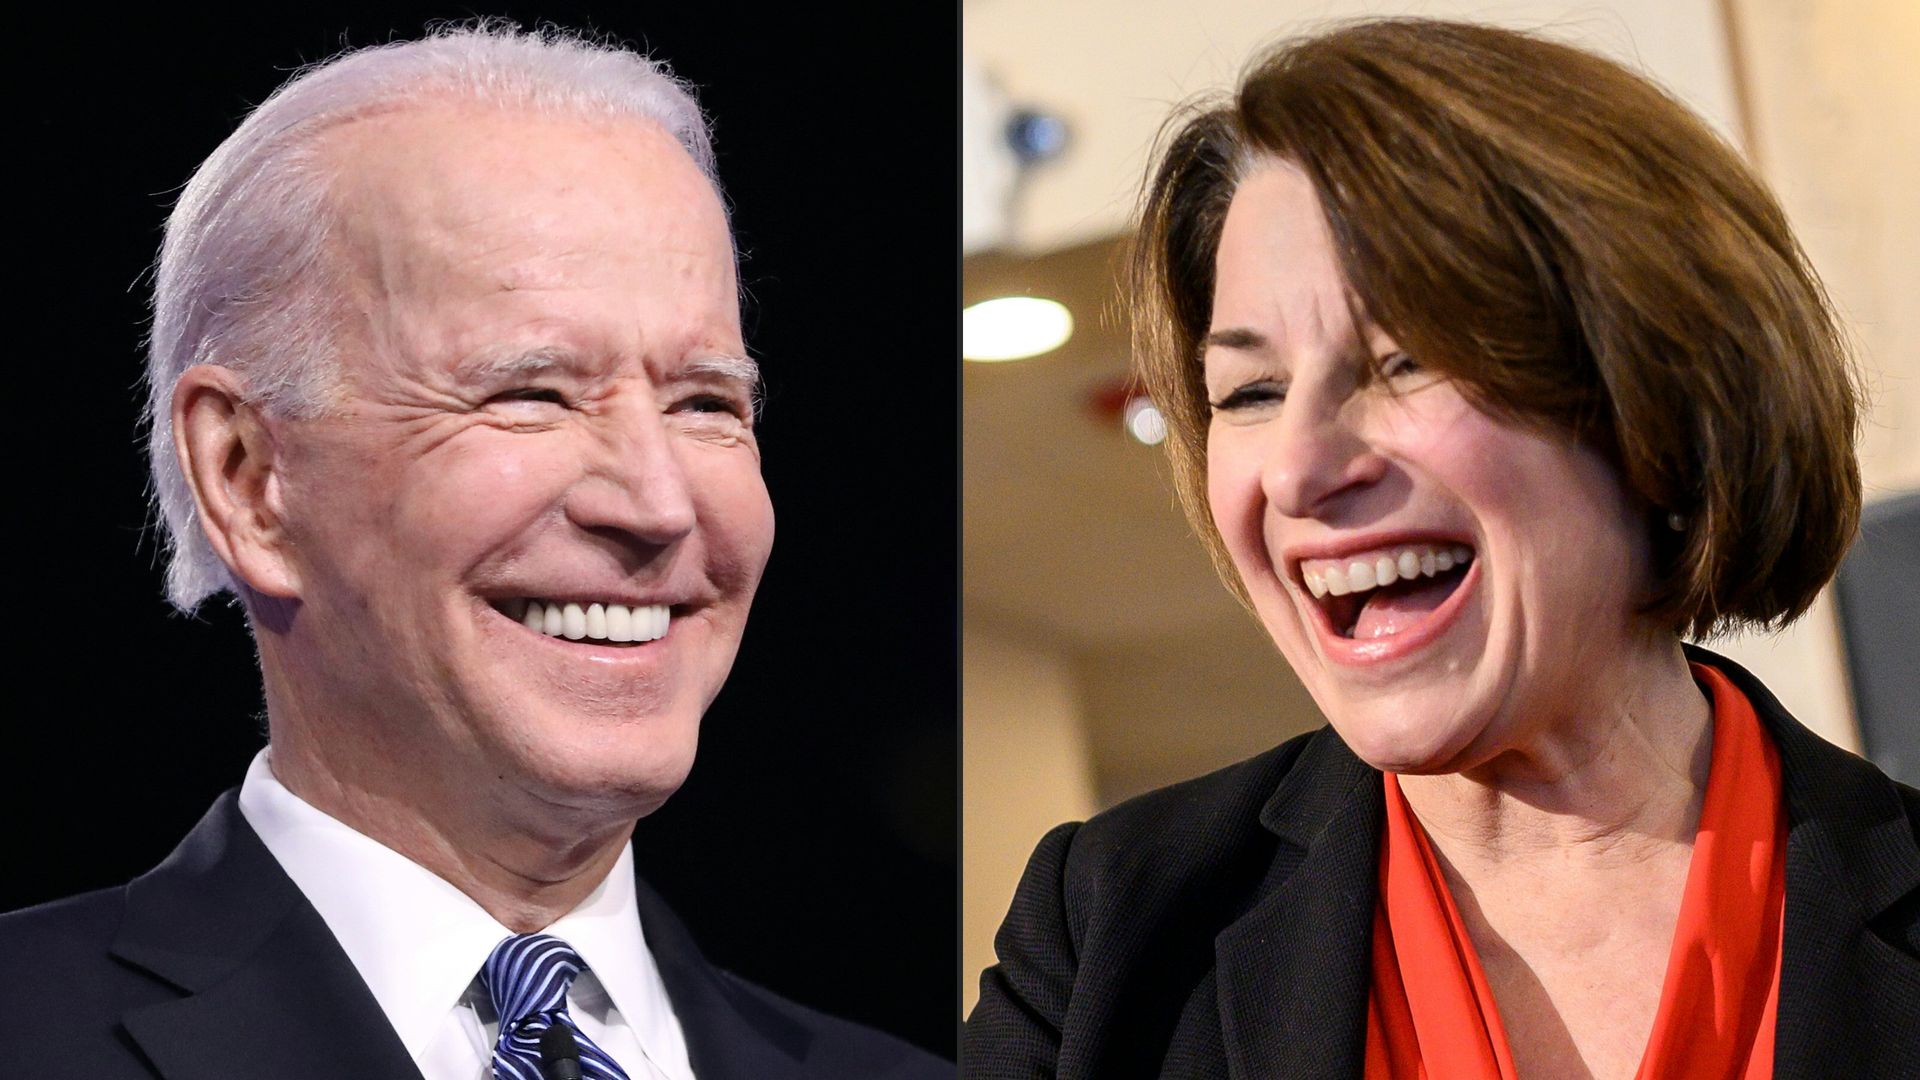 Joe Biden and Amy Klobuchar